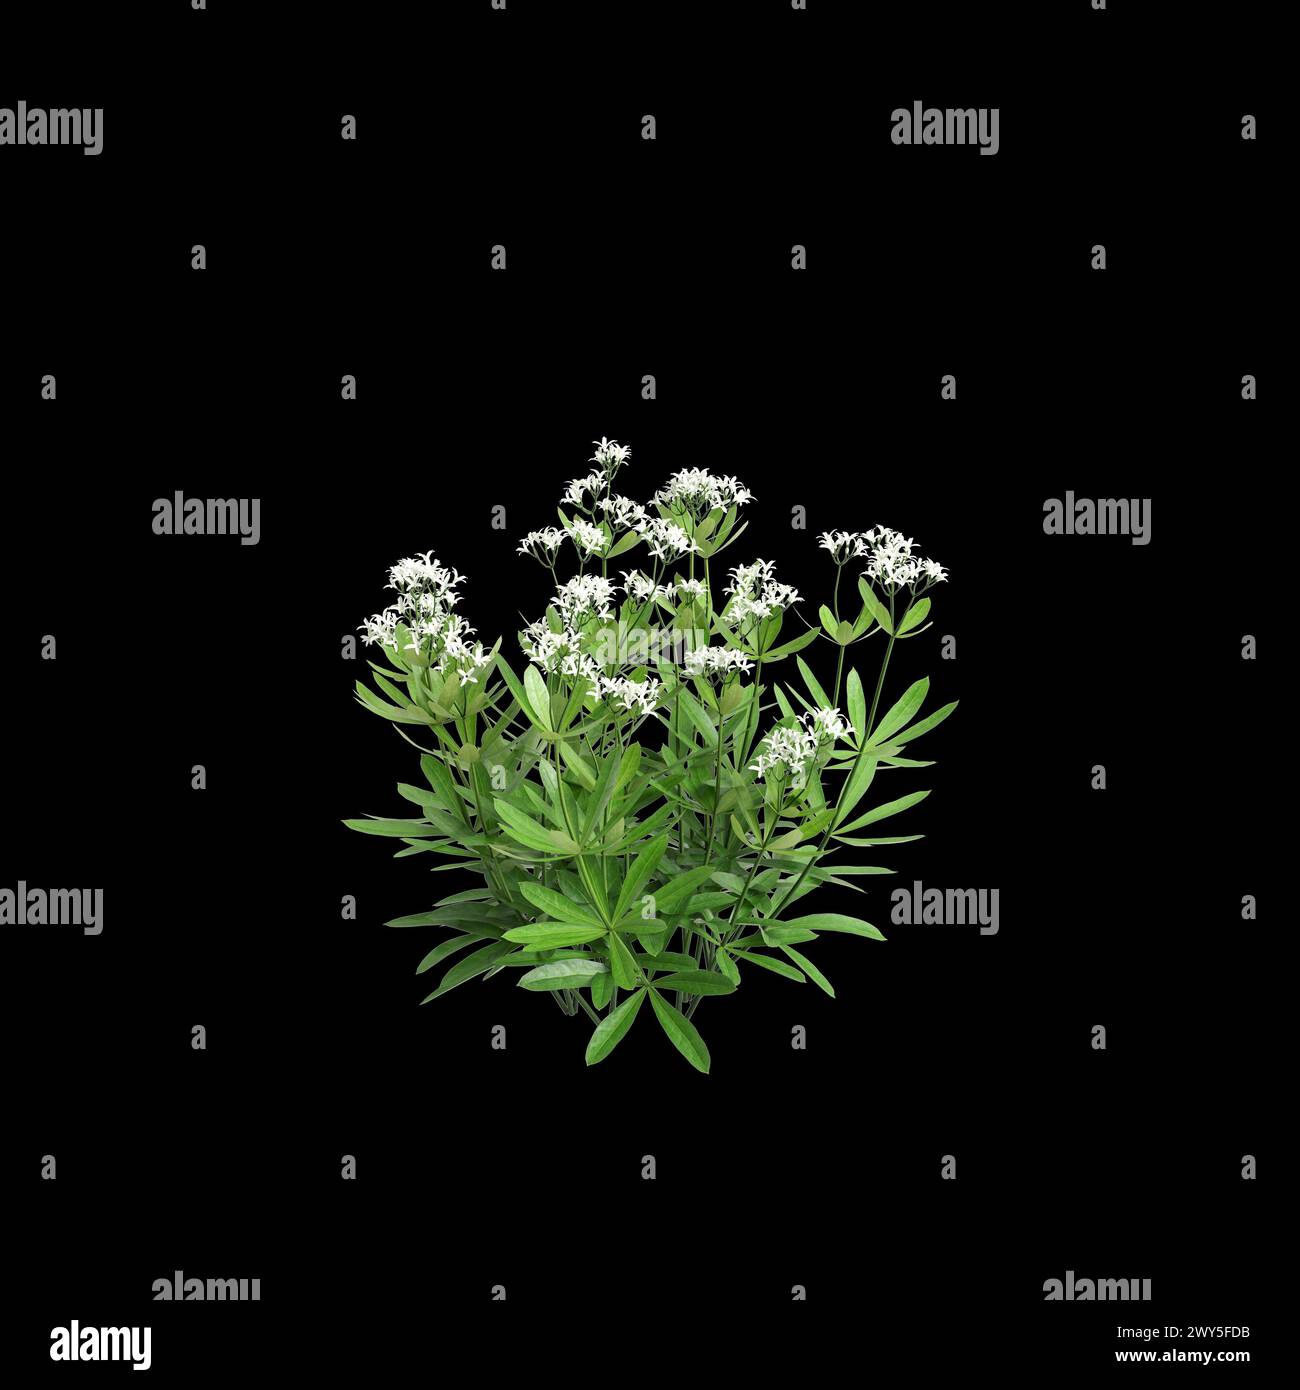 3d illustration of Galium odoratum bush isolated on black background Stock Photo